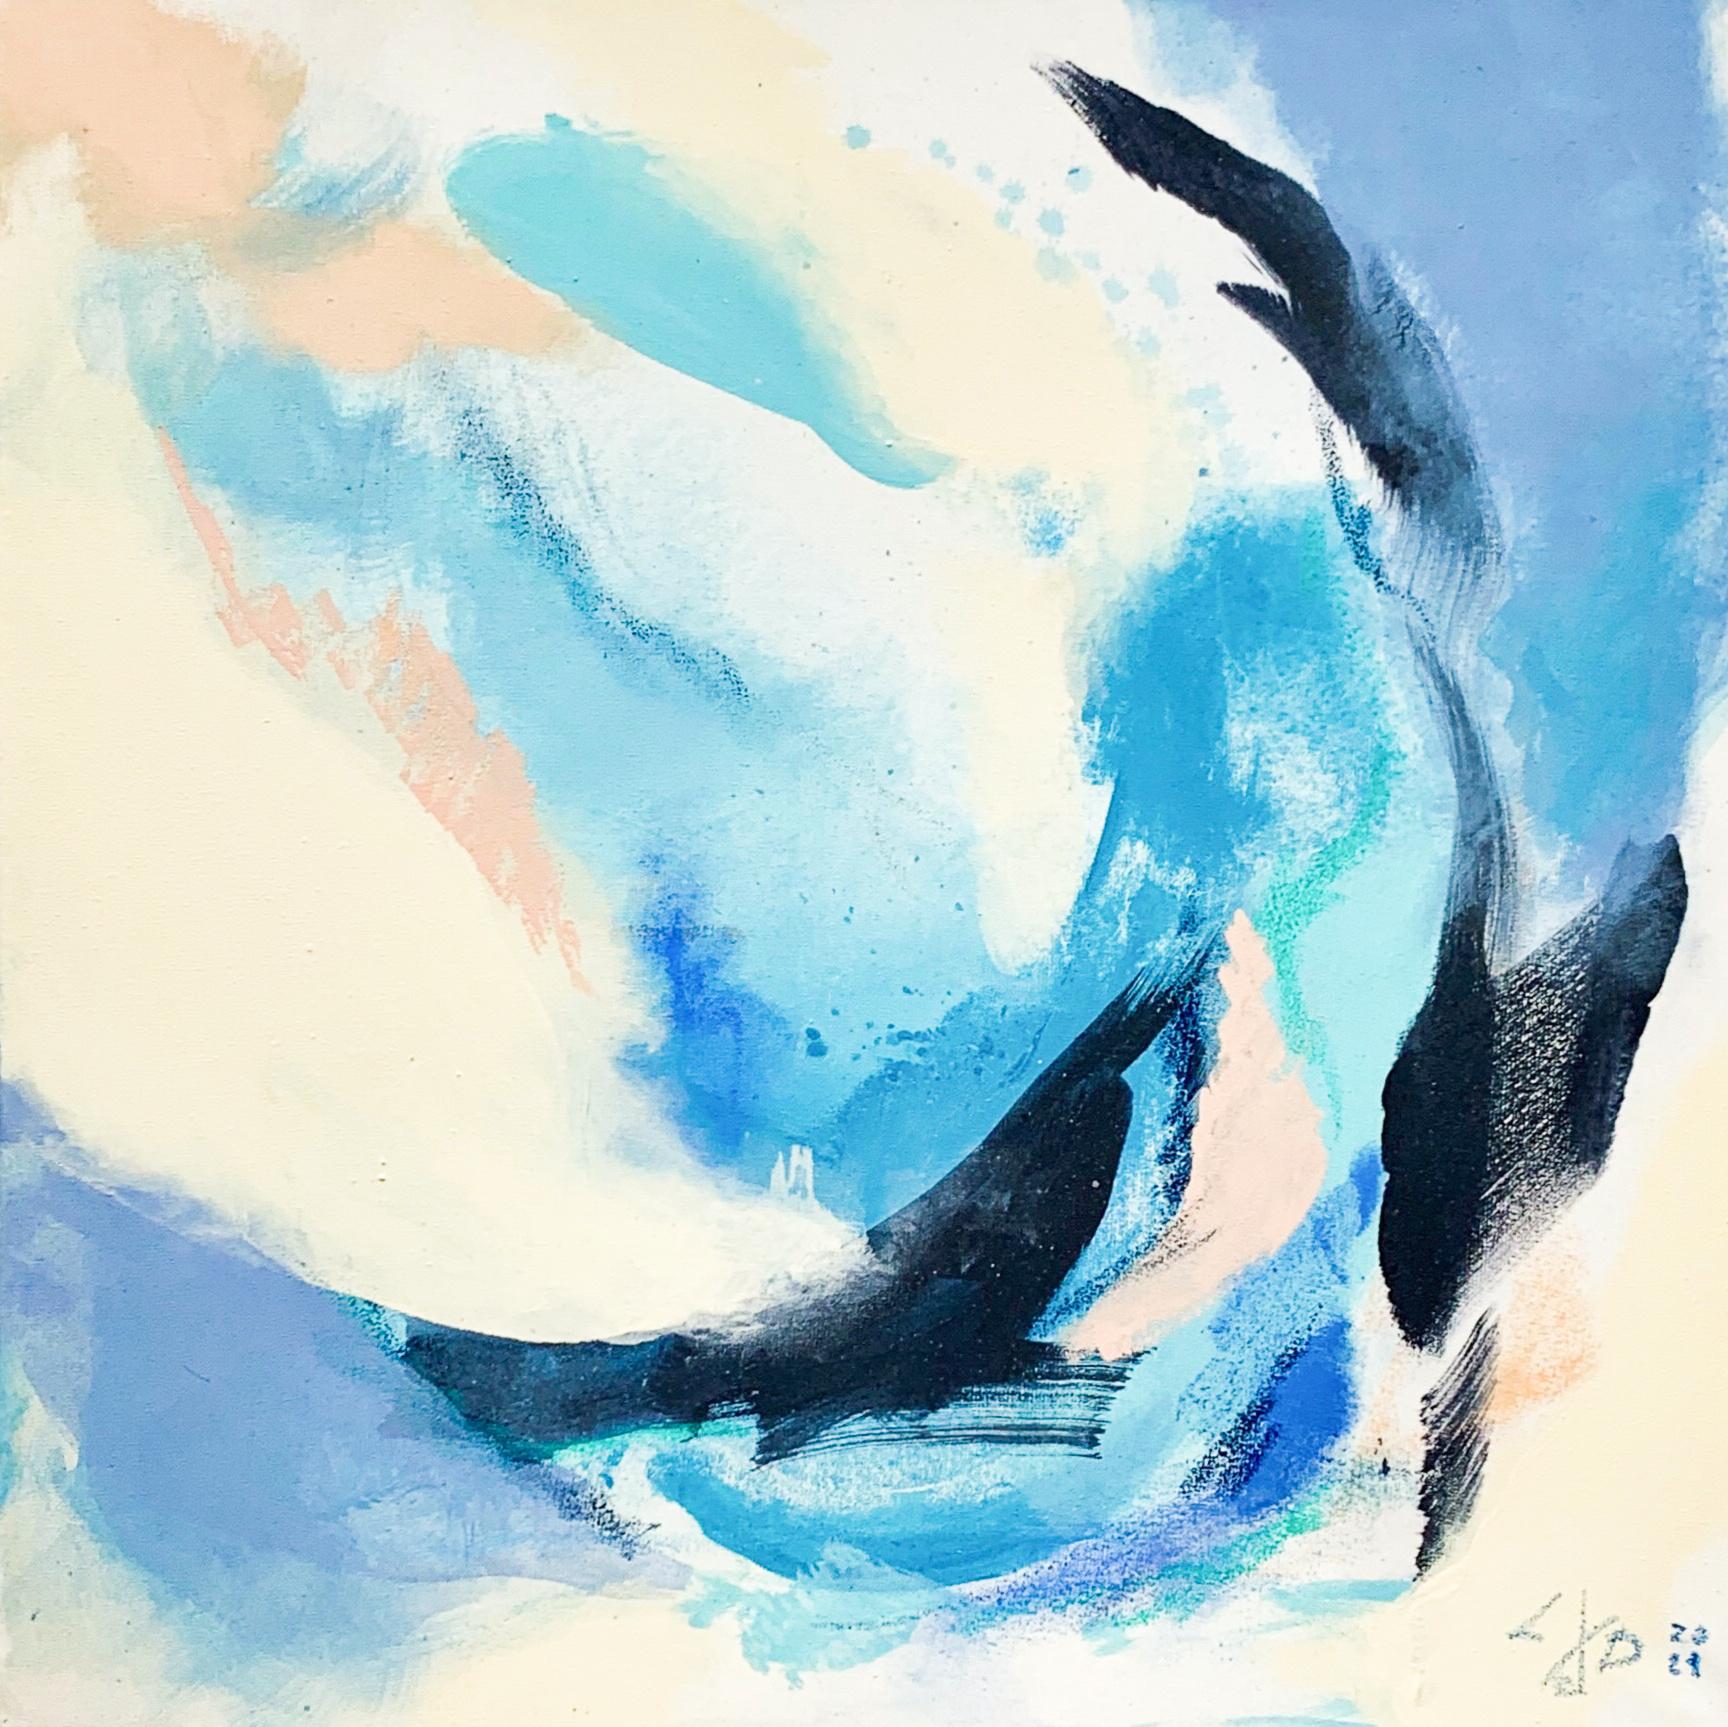 Abstract Painting Lesia Danilina - "Moments of summer2" (Moments de l'été) expressionnisme abstrait, bleu, beige, mer, ciel